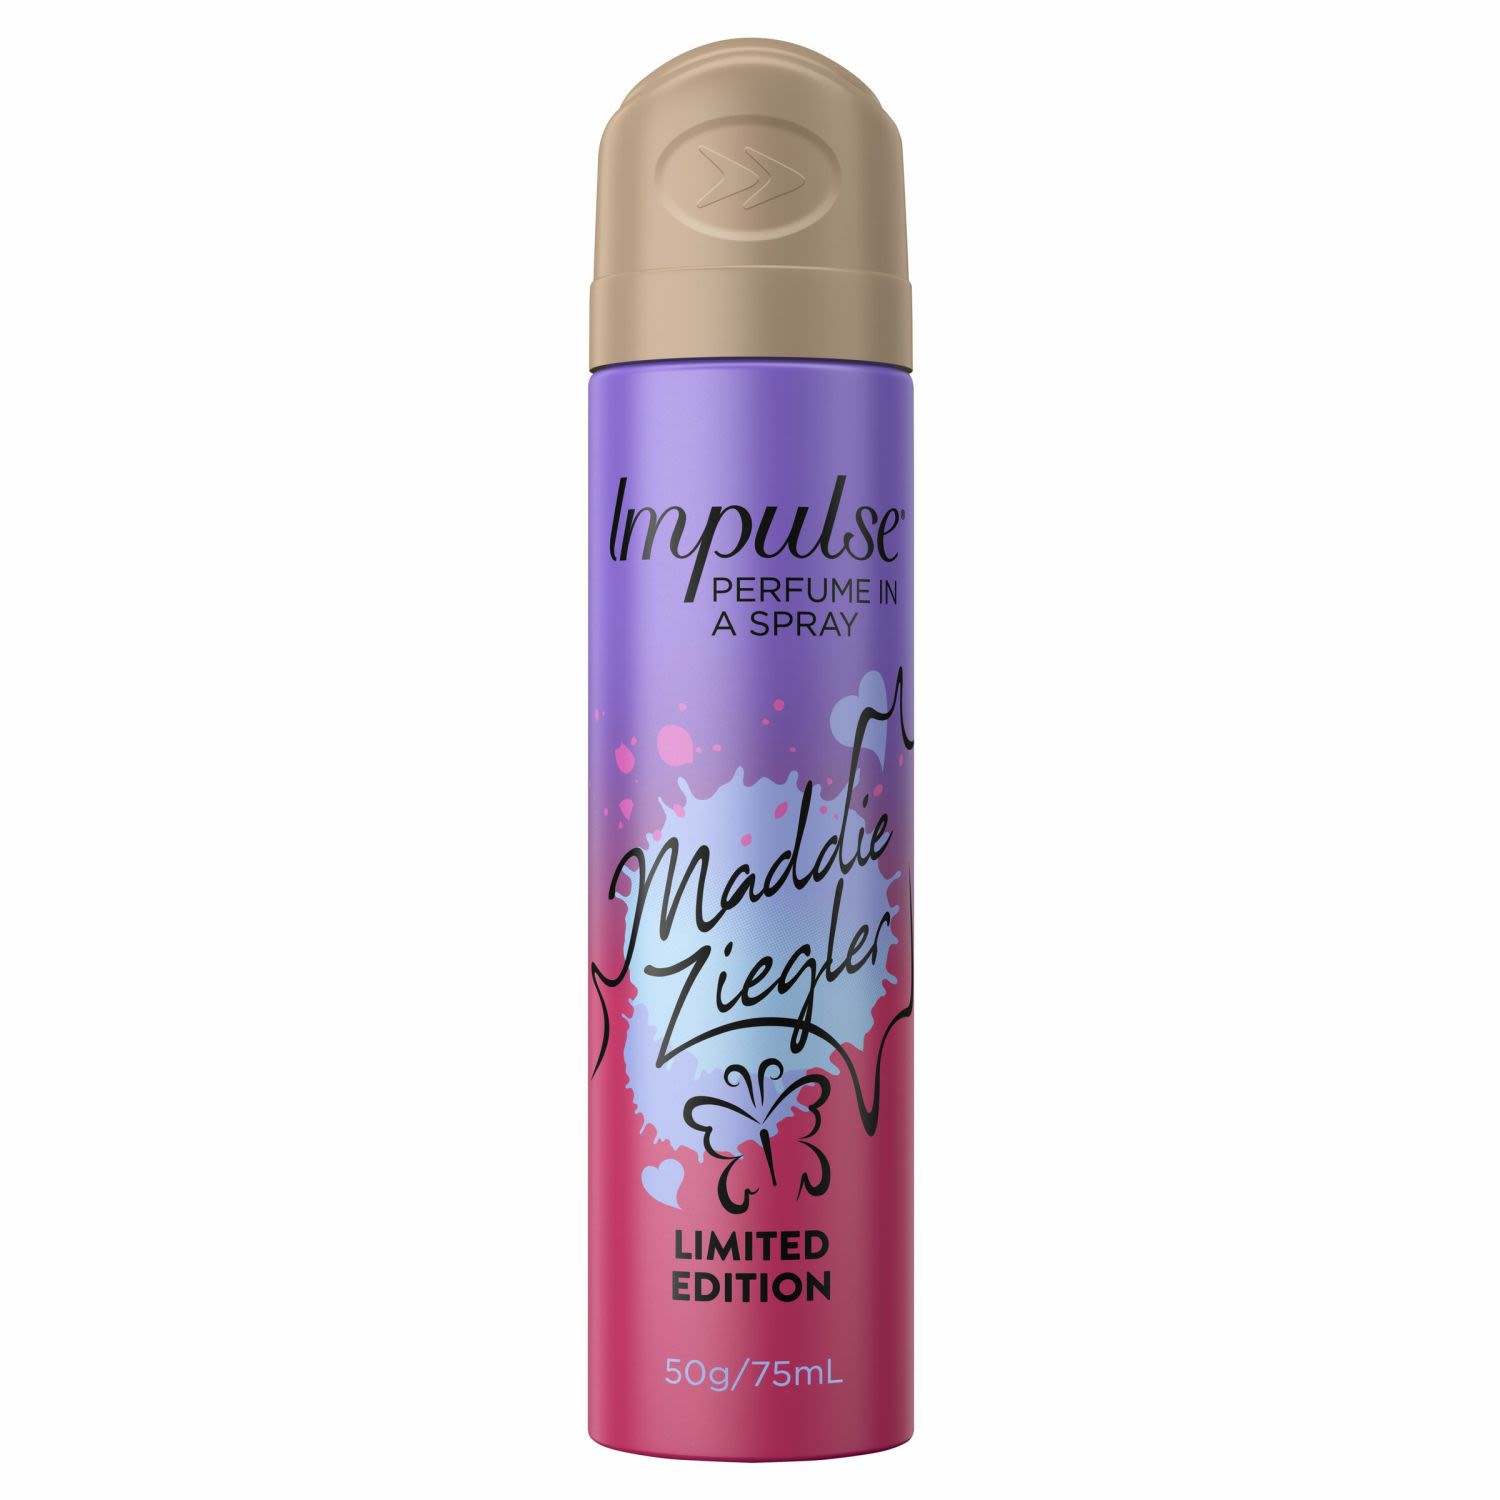 Impulse Women Body Spray Aerosol Deodorant Maddie Ziegler Limited Edition, 75 Millilitre